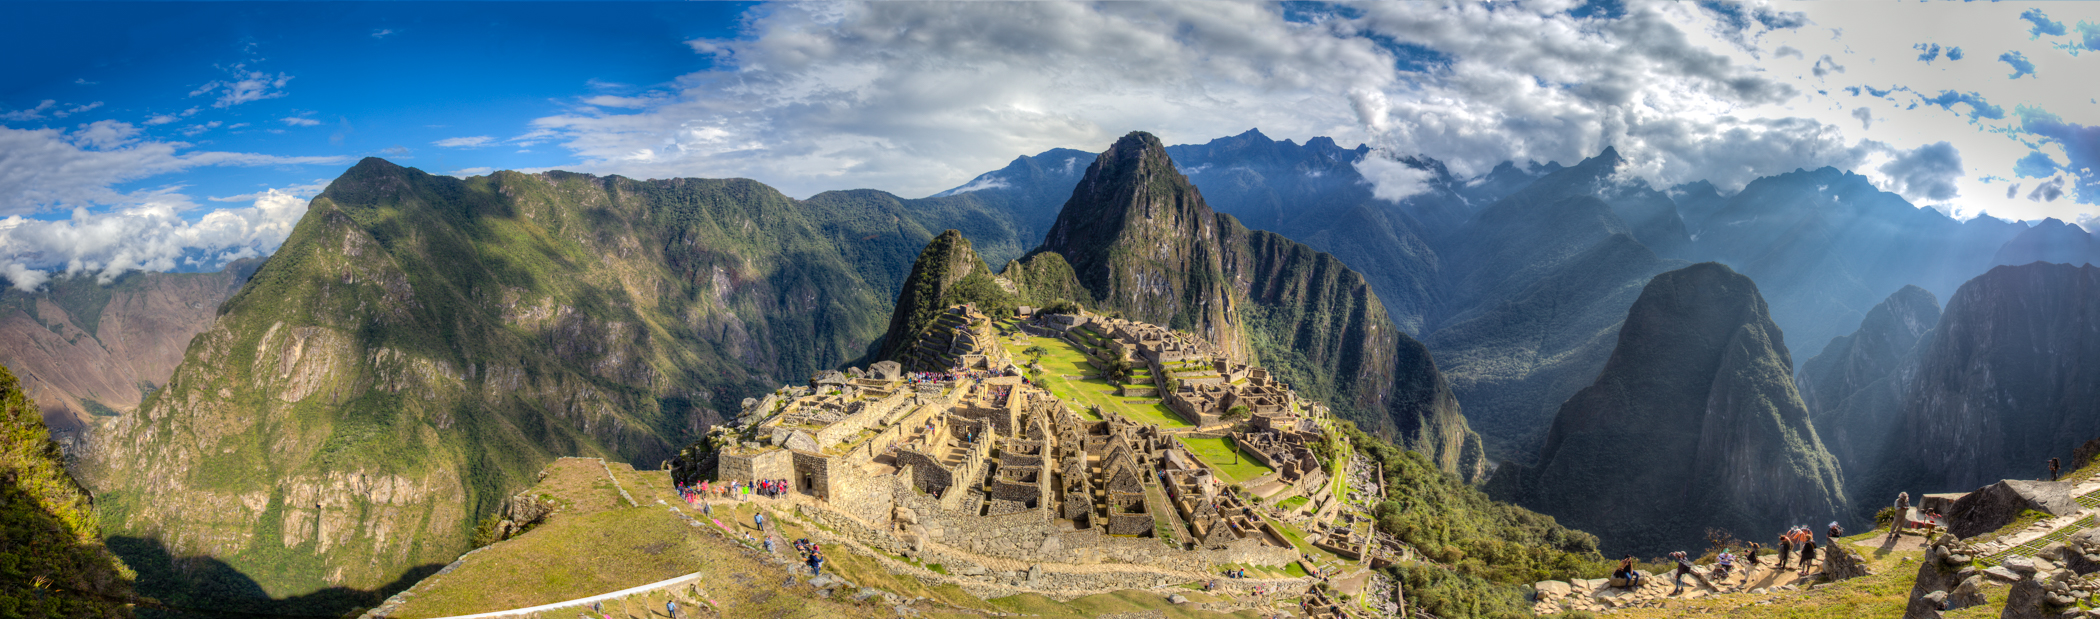 The powerful vision of Machu Picchu...